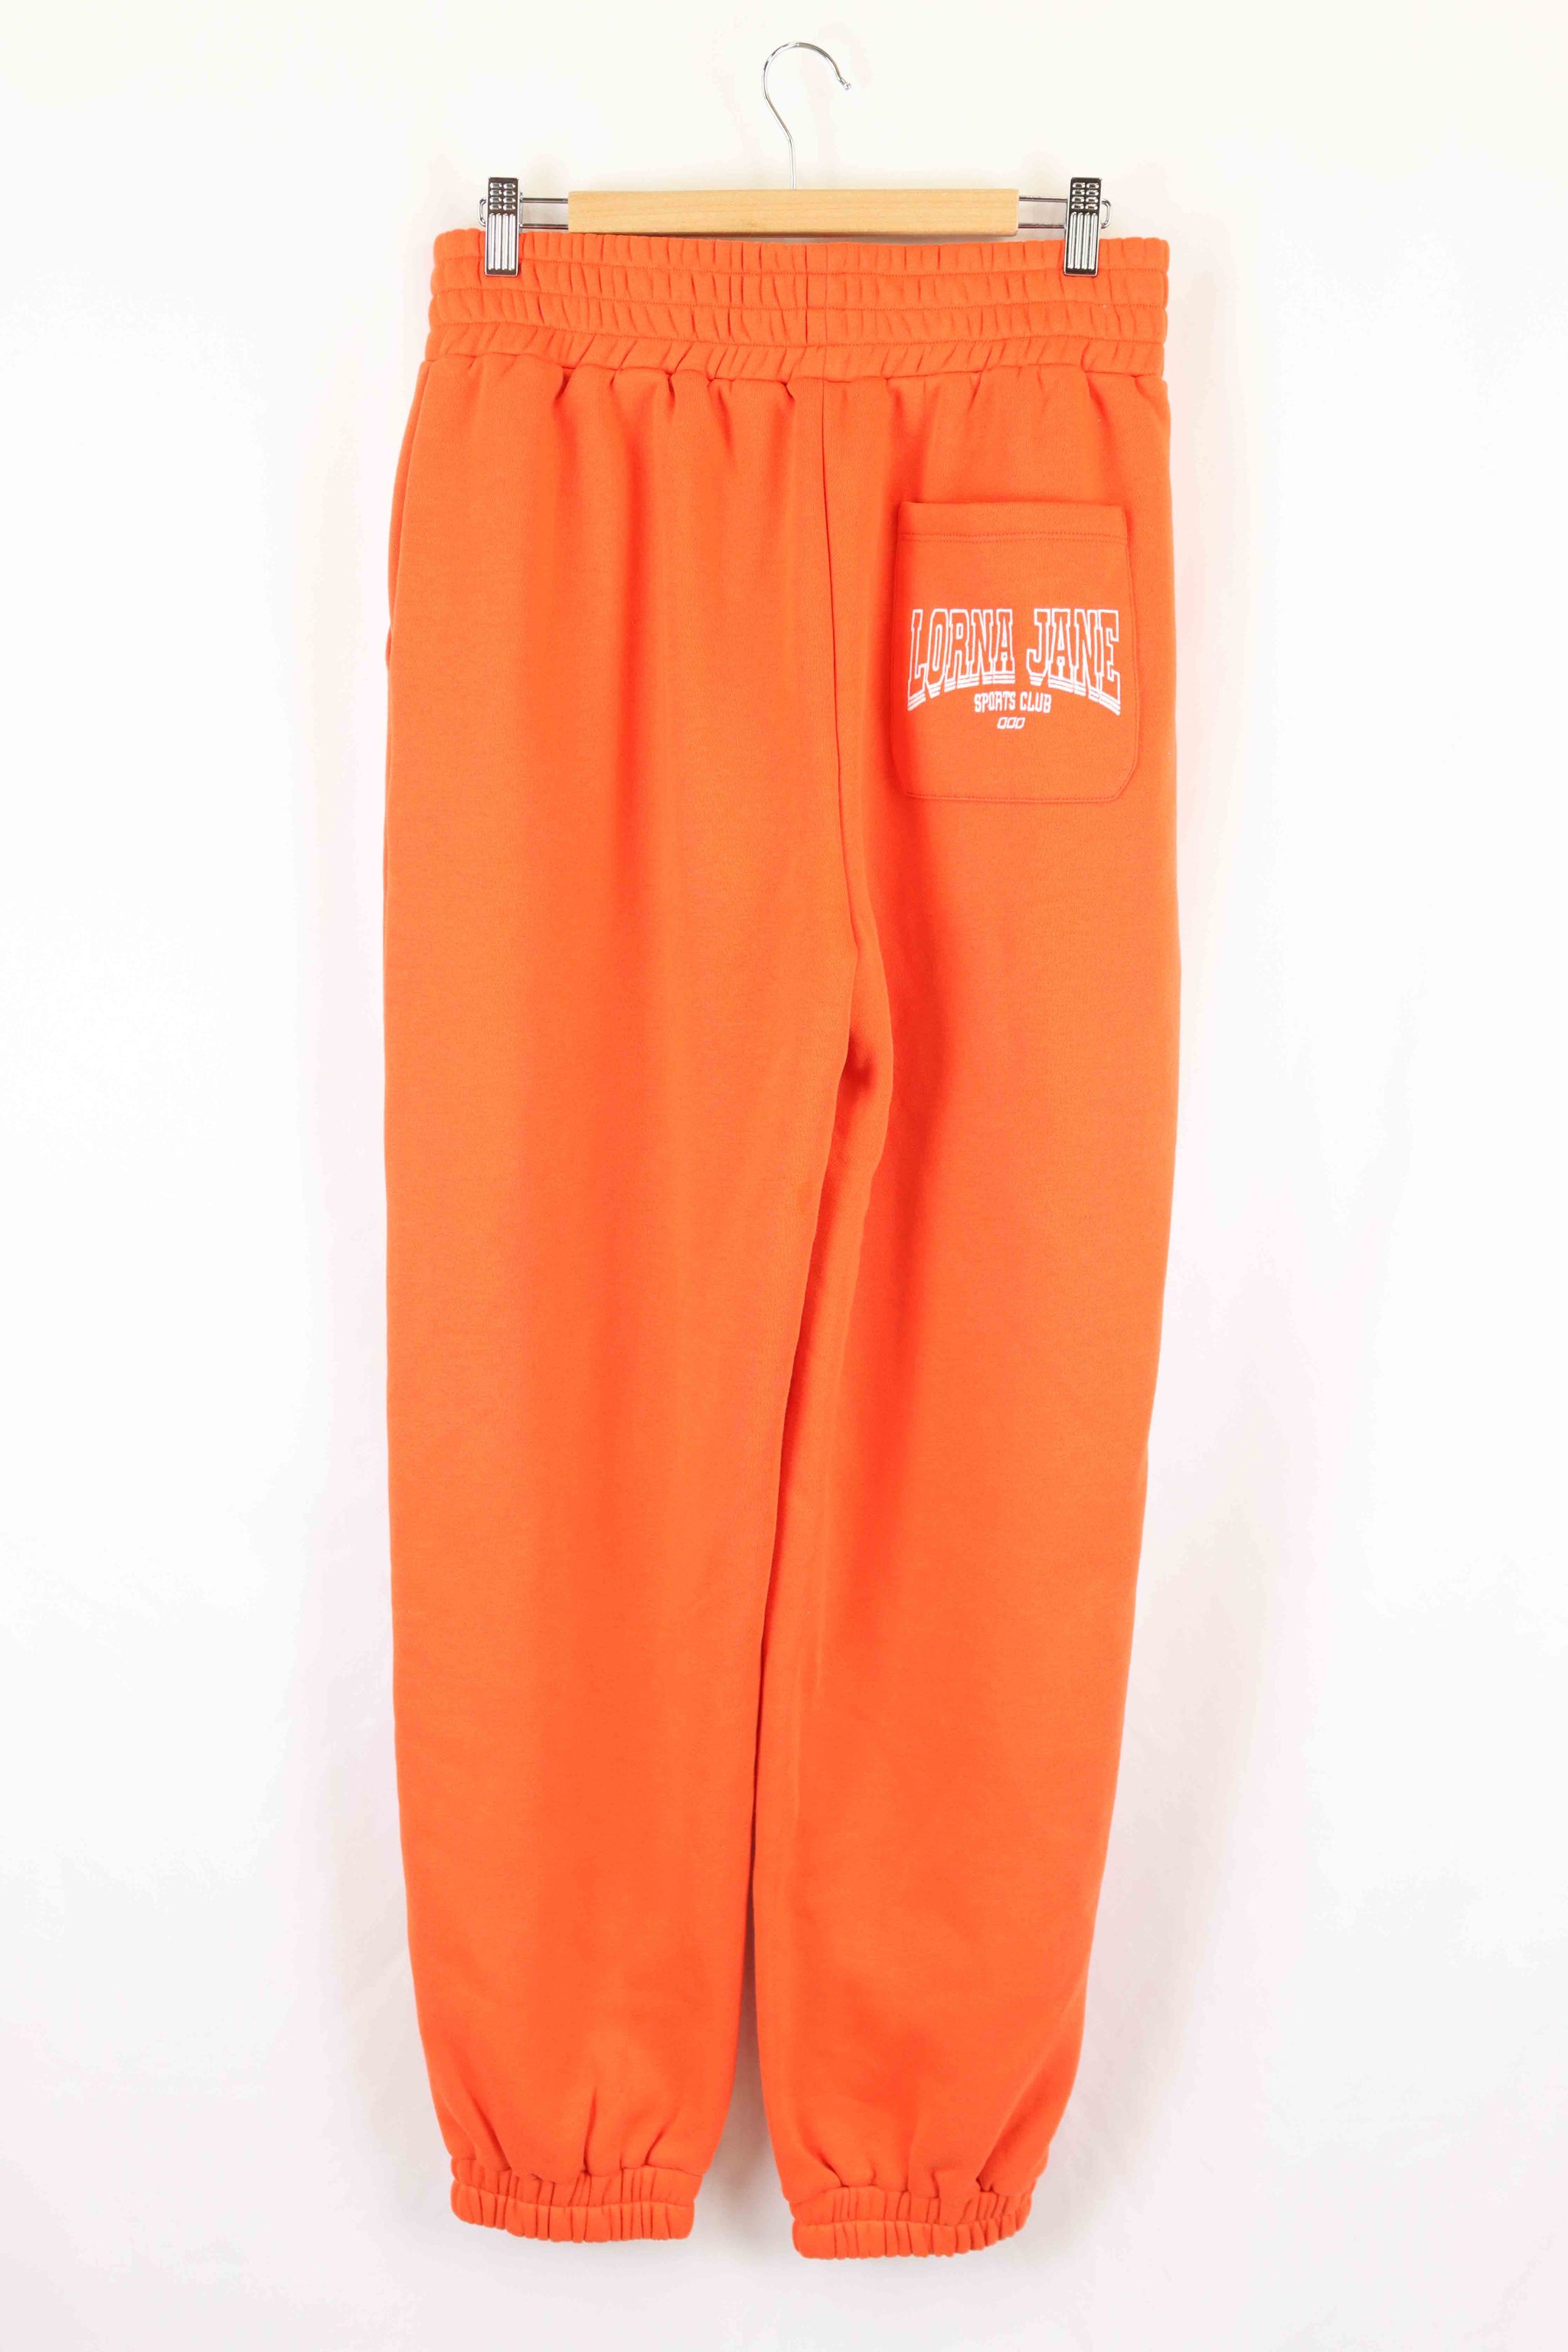 Lorna Jane Orange Tracksuit Pants M - Reluv Clothing Australia